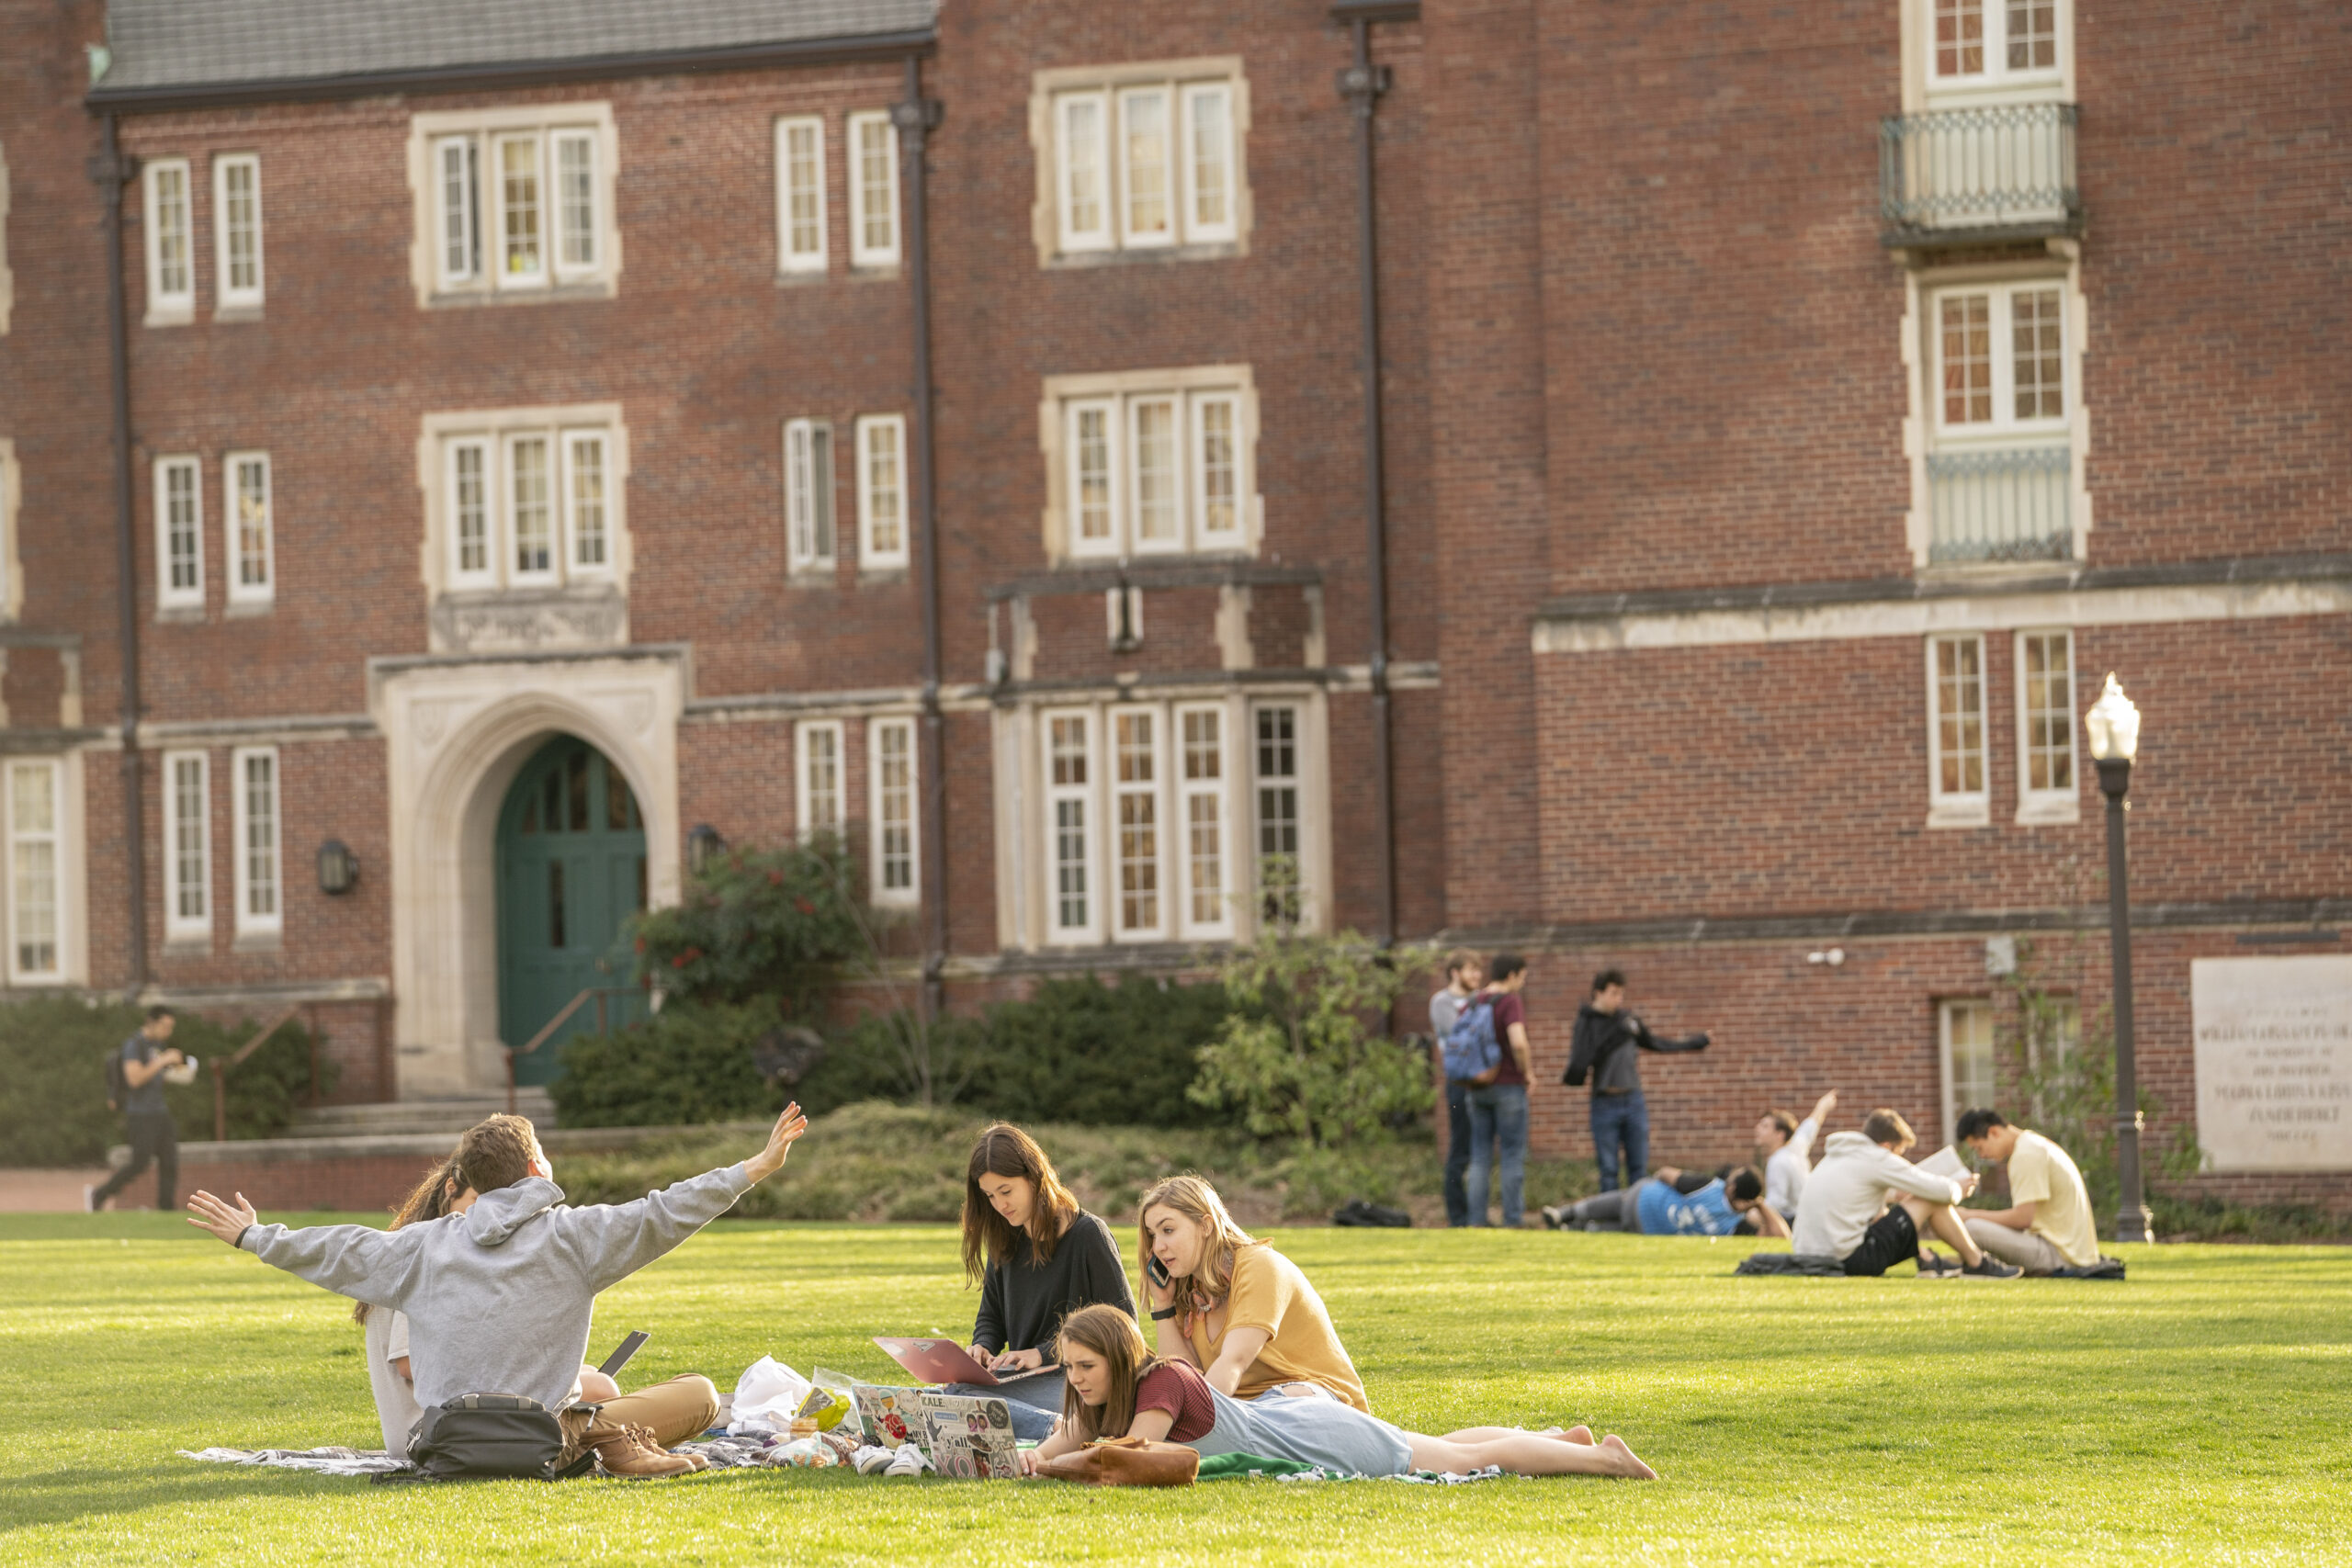 Students enjoy warm winter day on campus